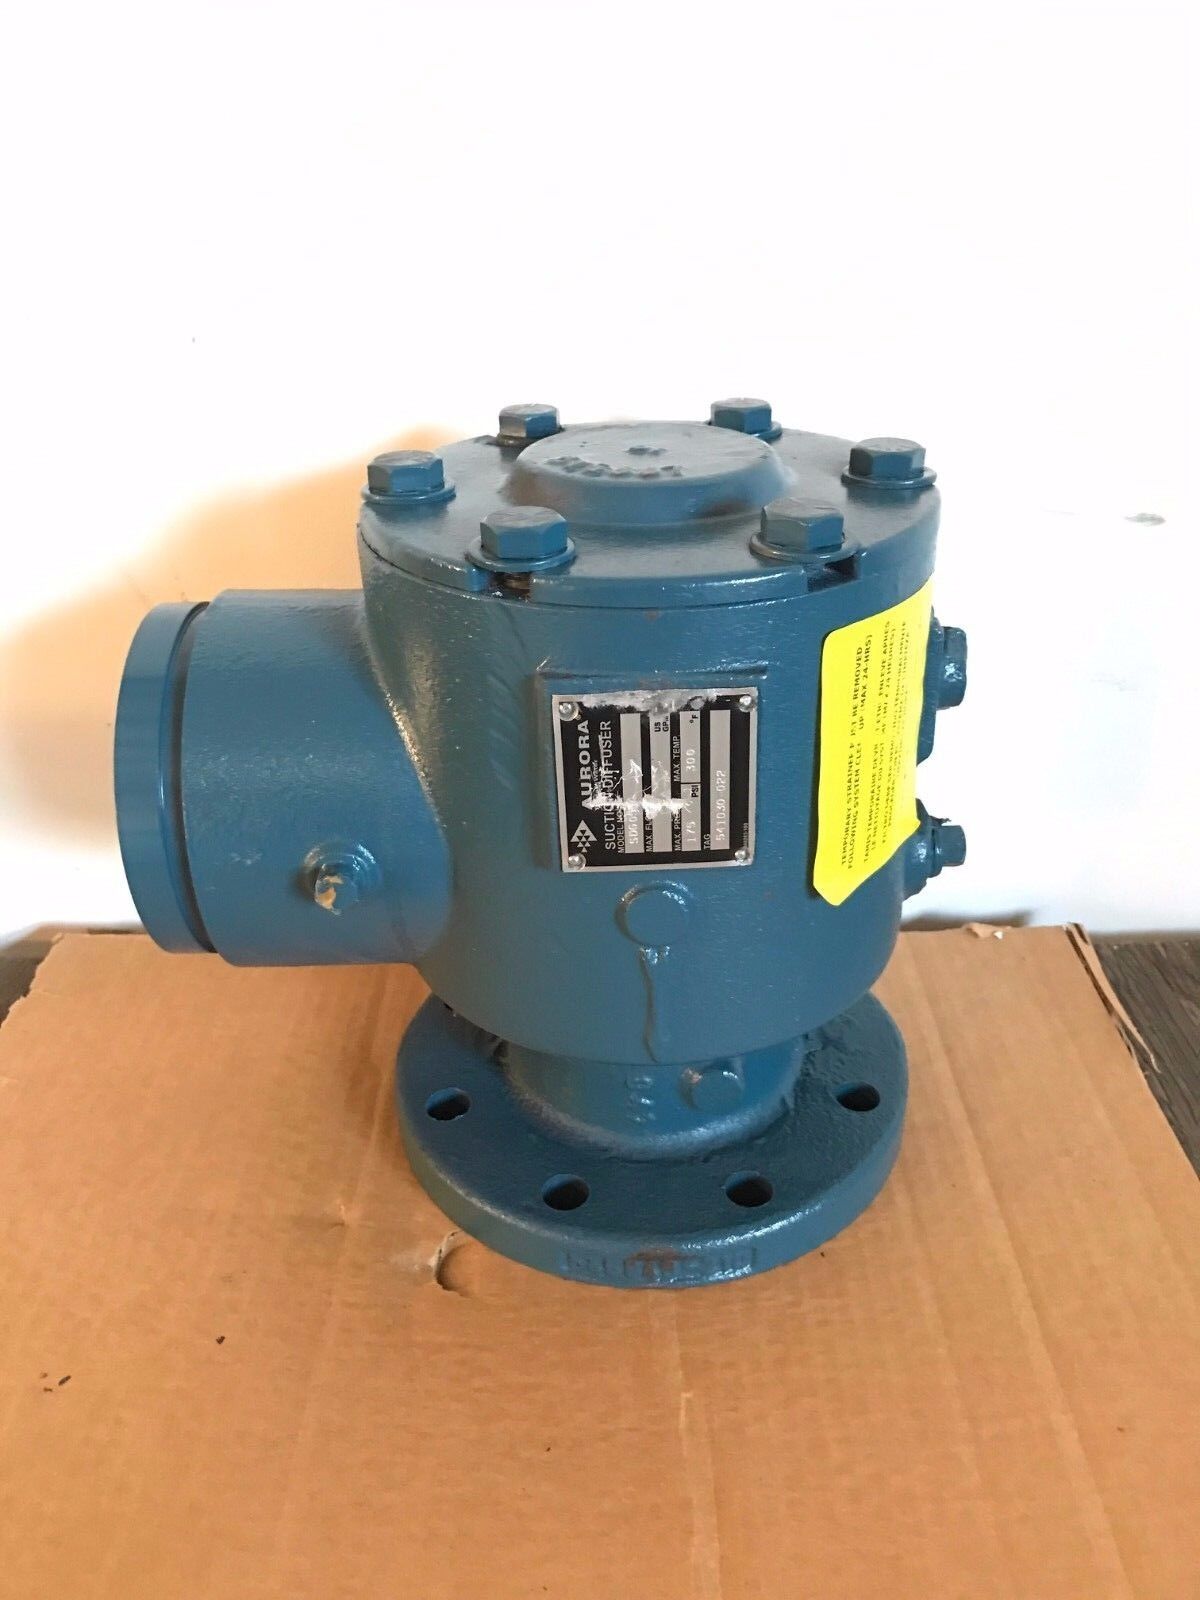 Aurora SDG0504 Suction Diffuser 541030-022 Pentair Water Pump 175PSI 4